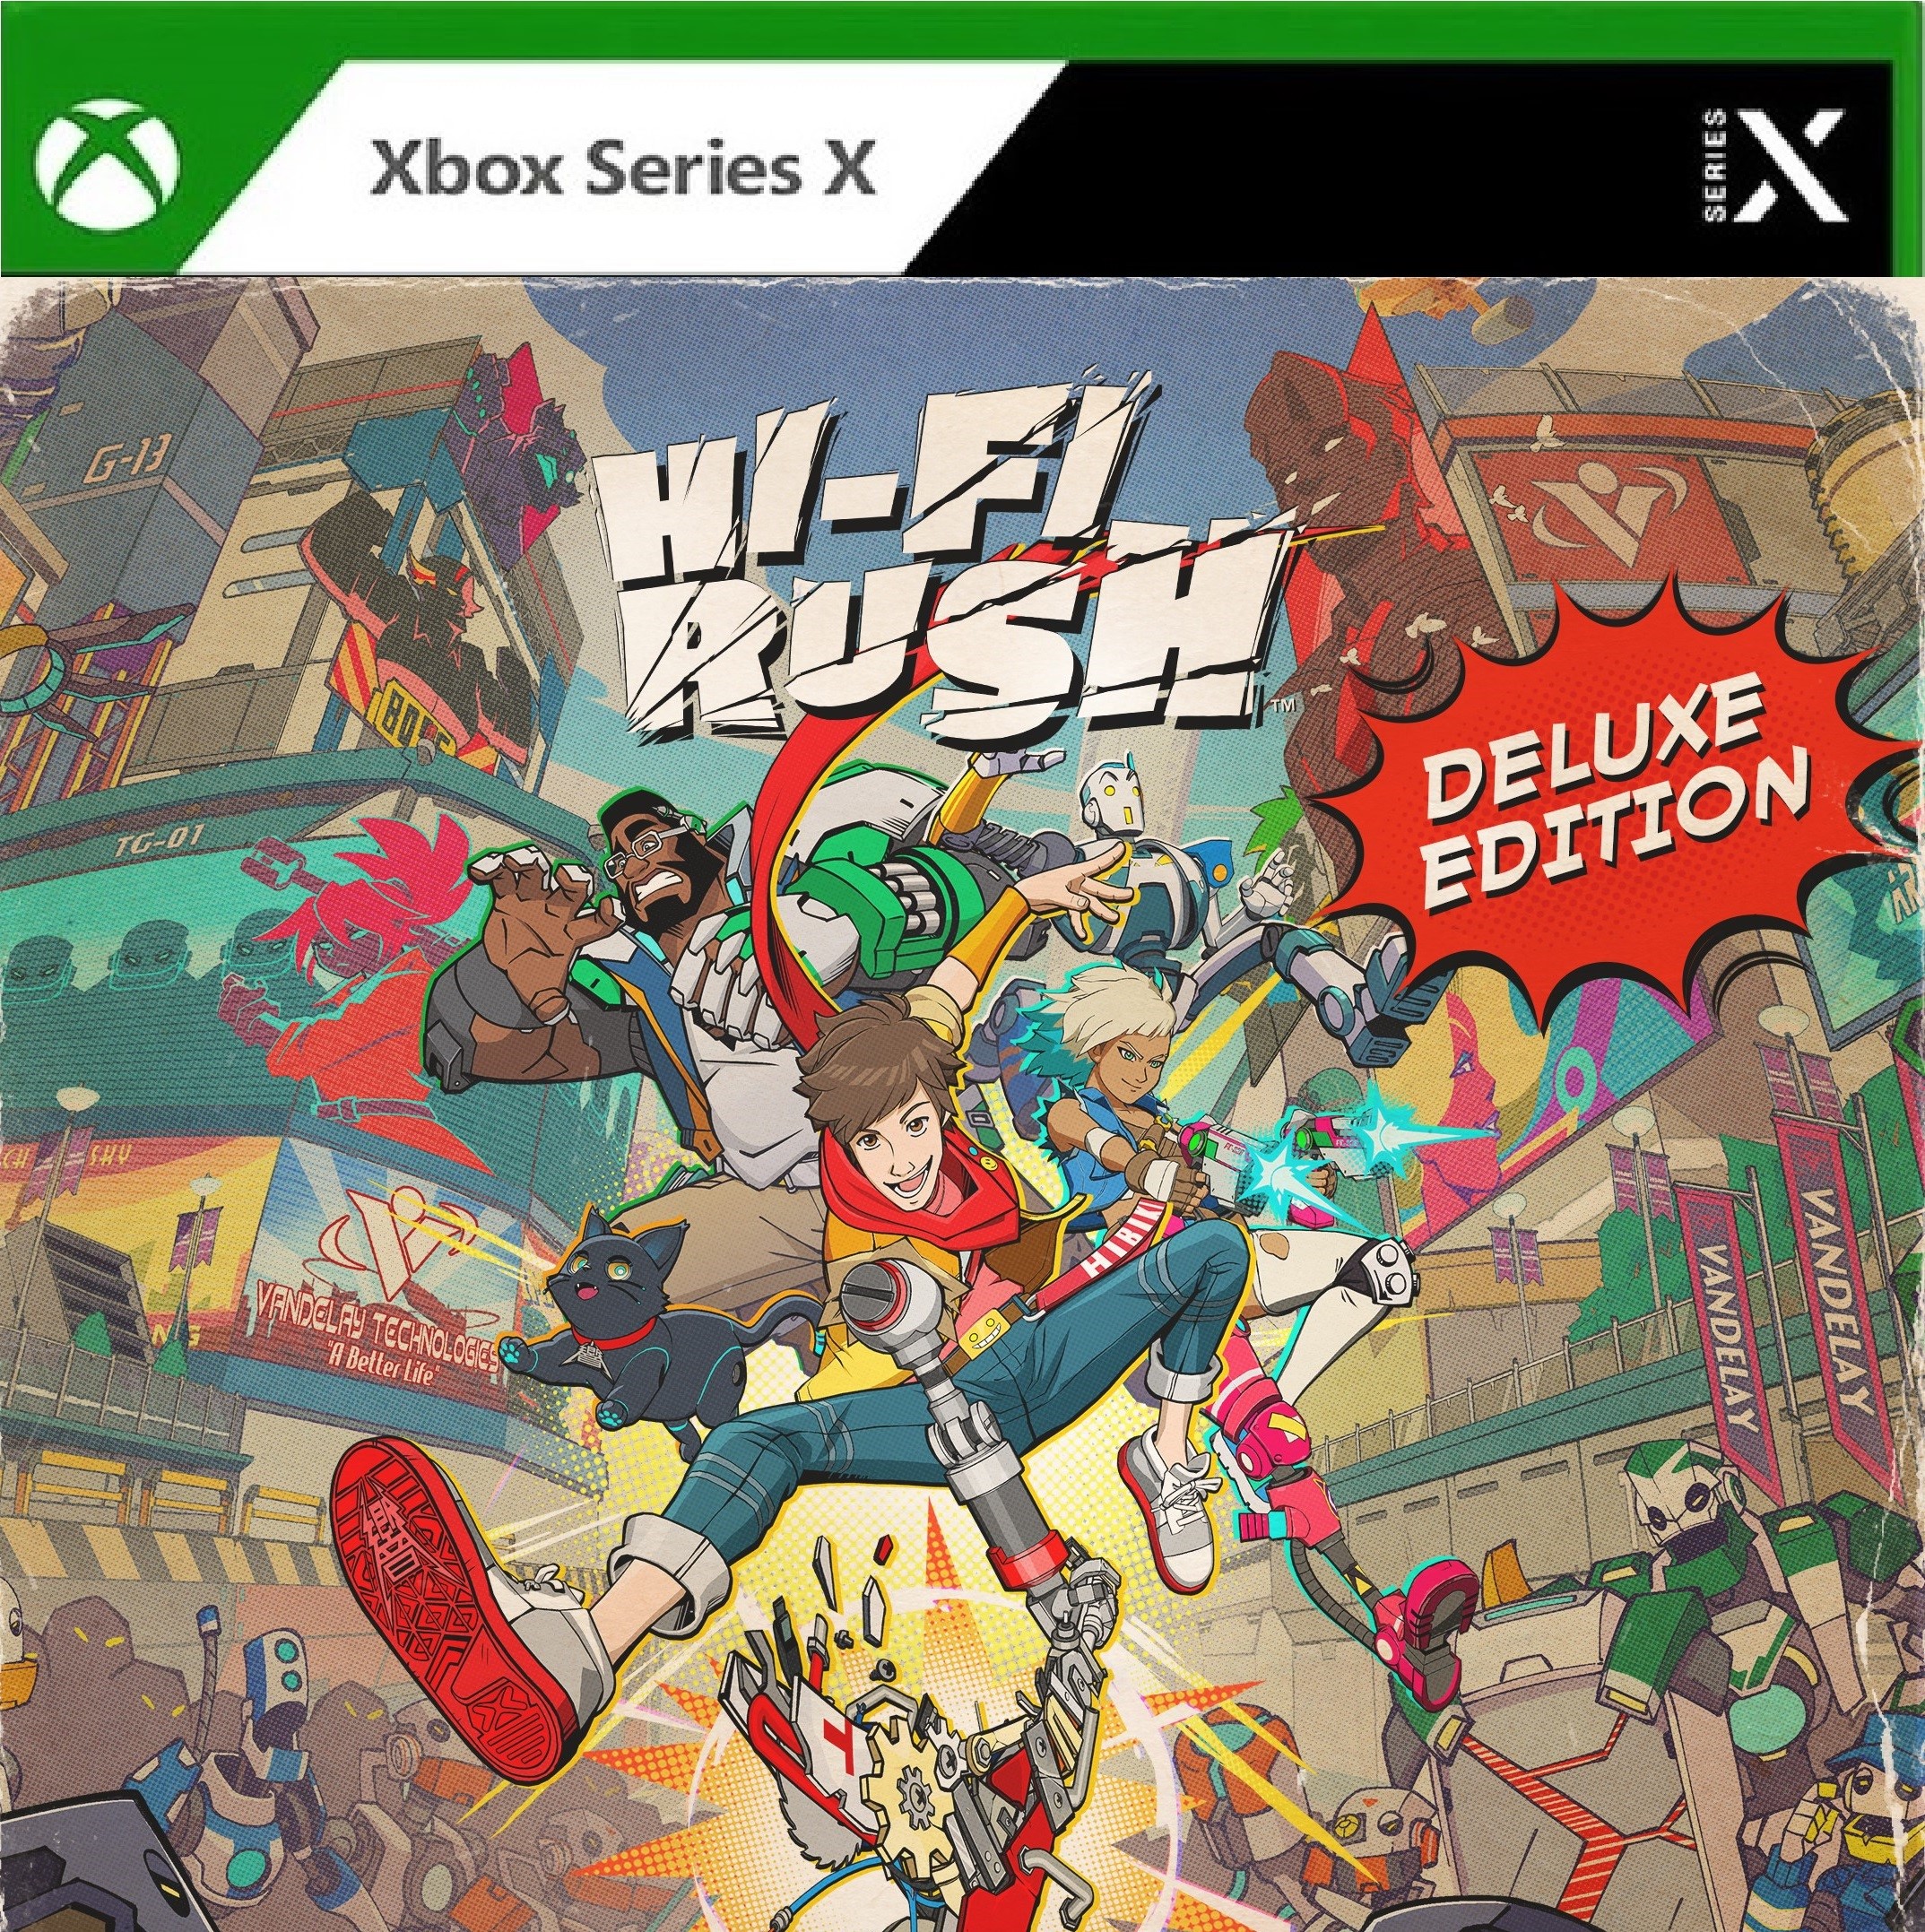 Hi Fi RUSH Deluxe Edition Xbox Series X|S